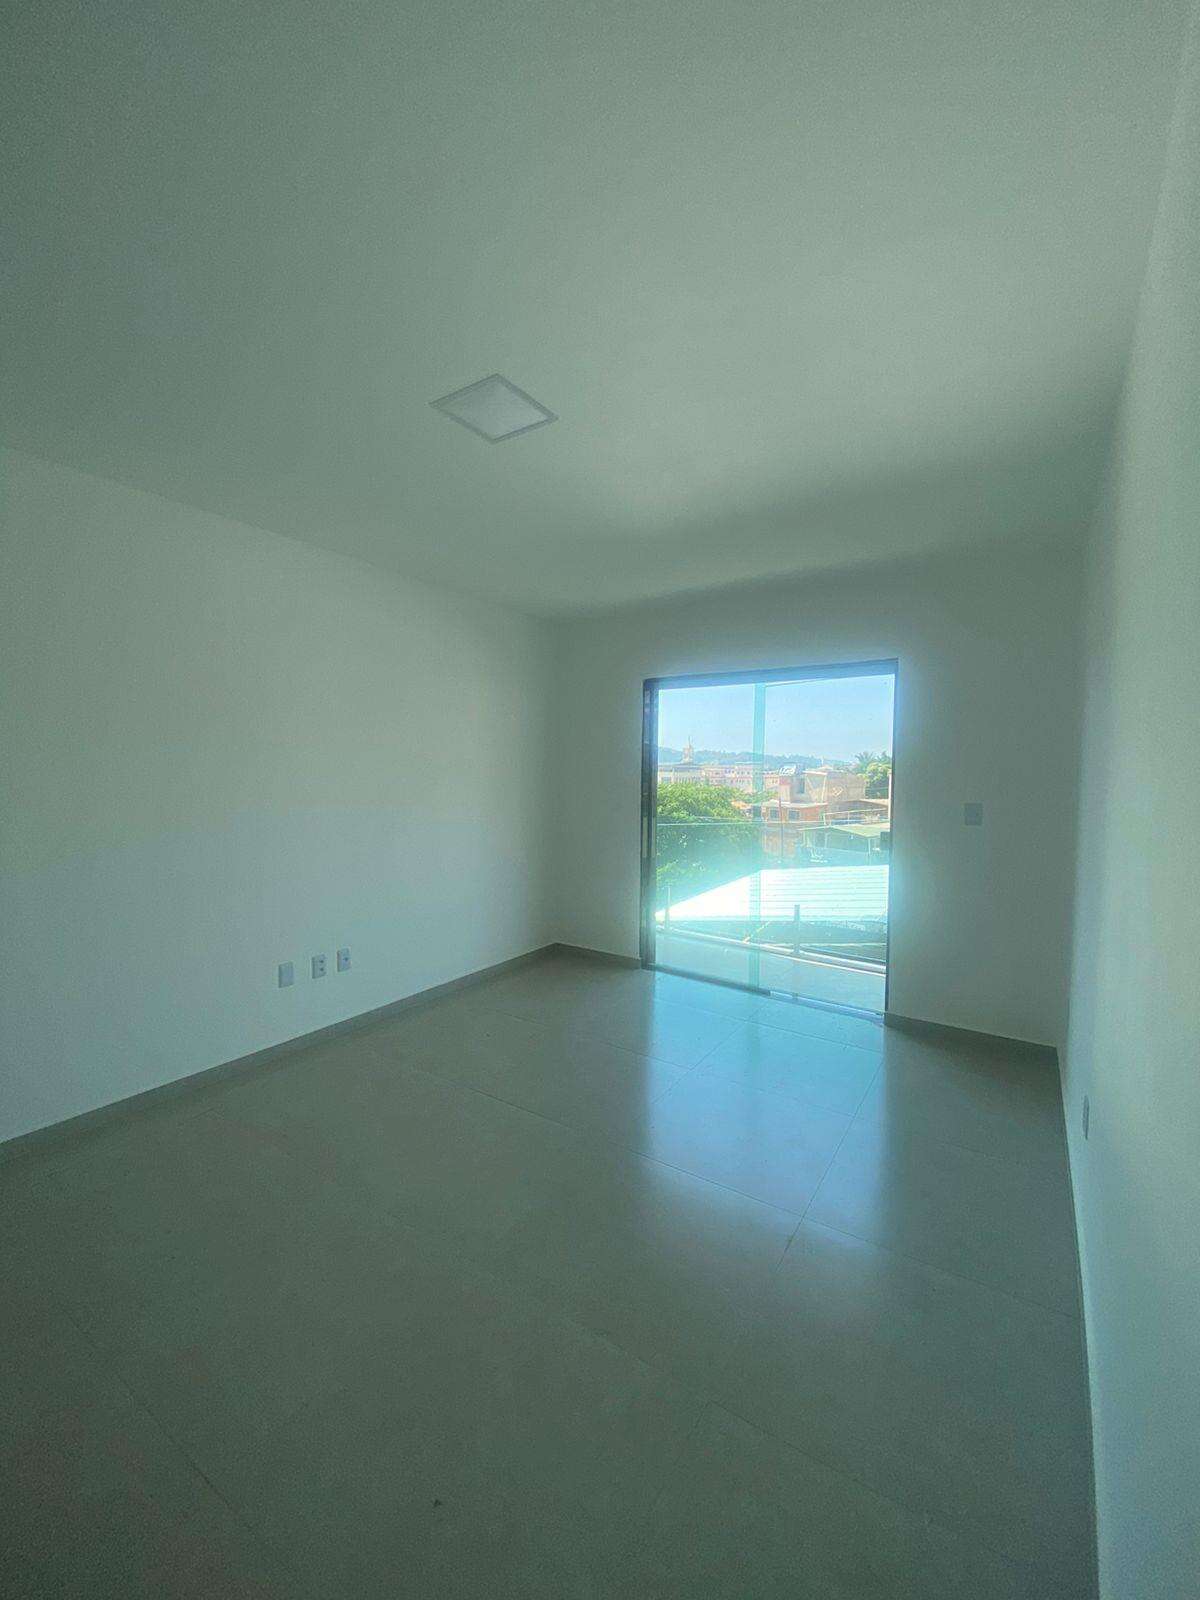 Apartamento 3 quartos para aluguel no Esplanada: c0f34d66-8-whatsapp-image-2023-11-20-at-14.48.38-1.jpeg